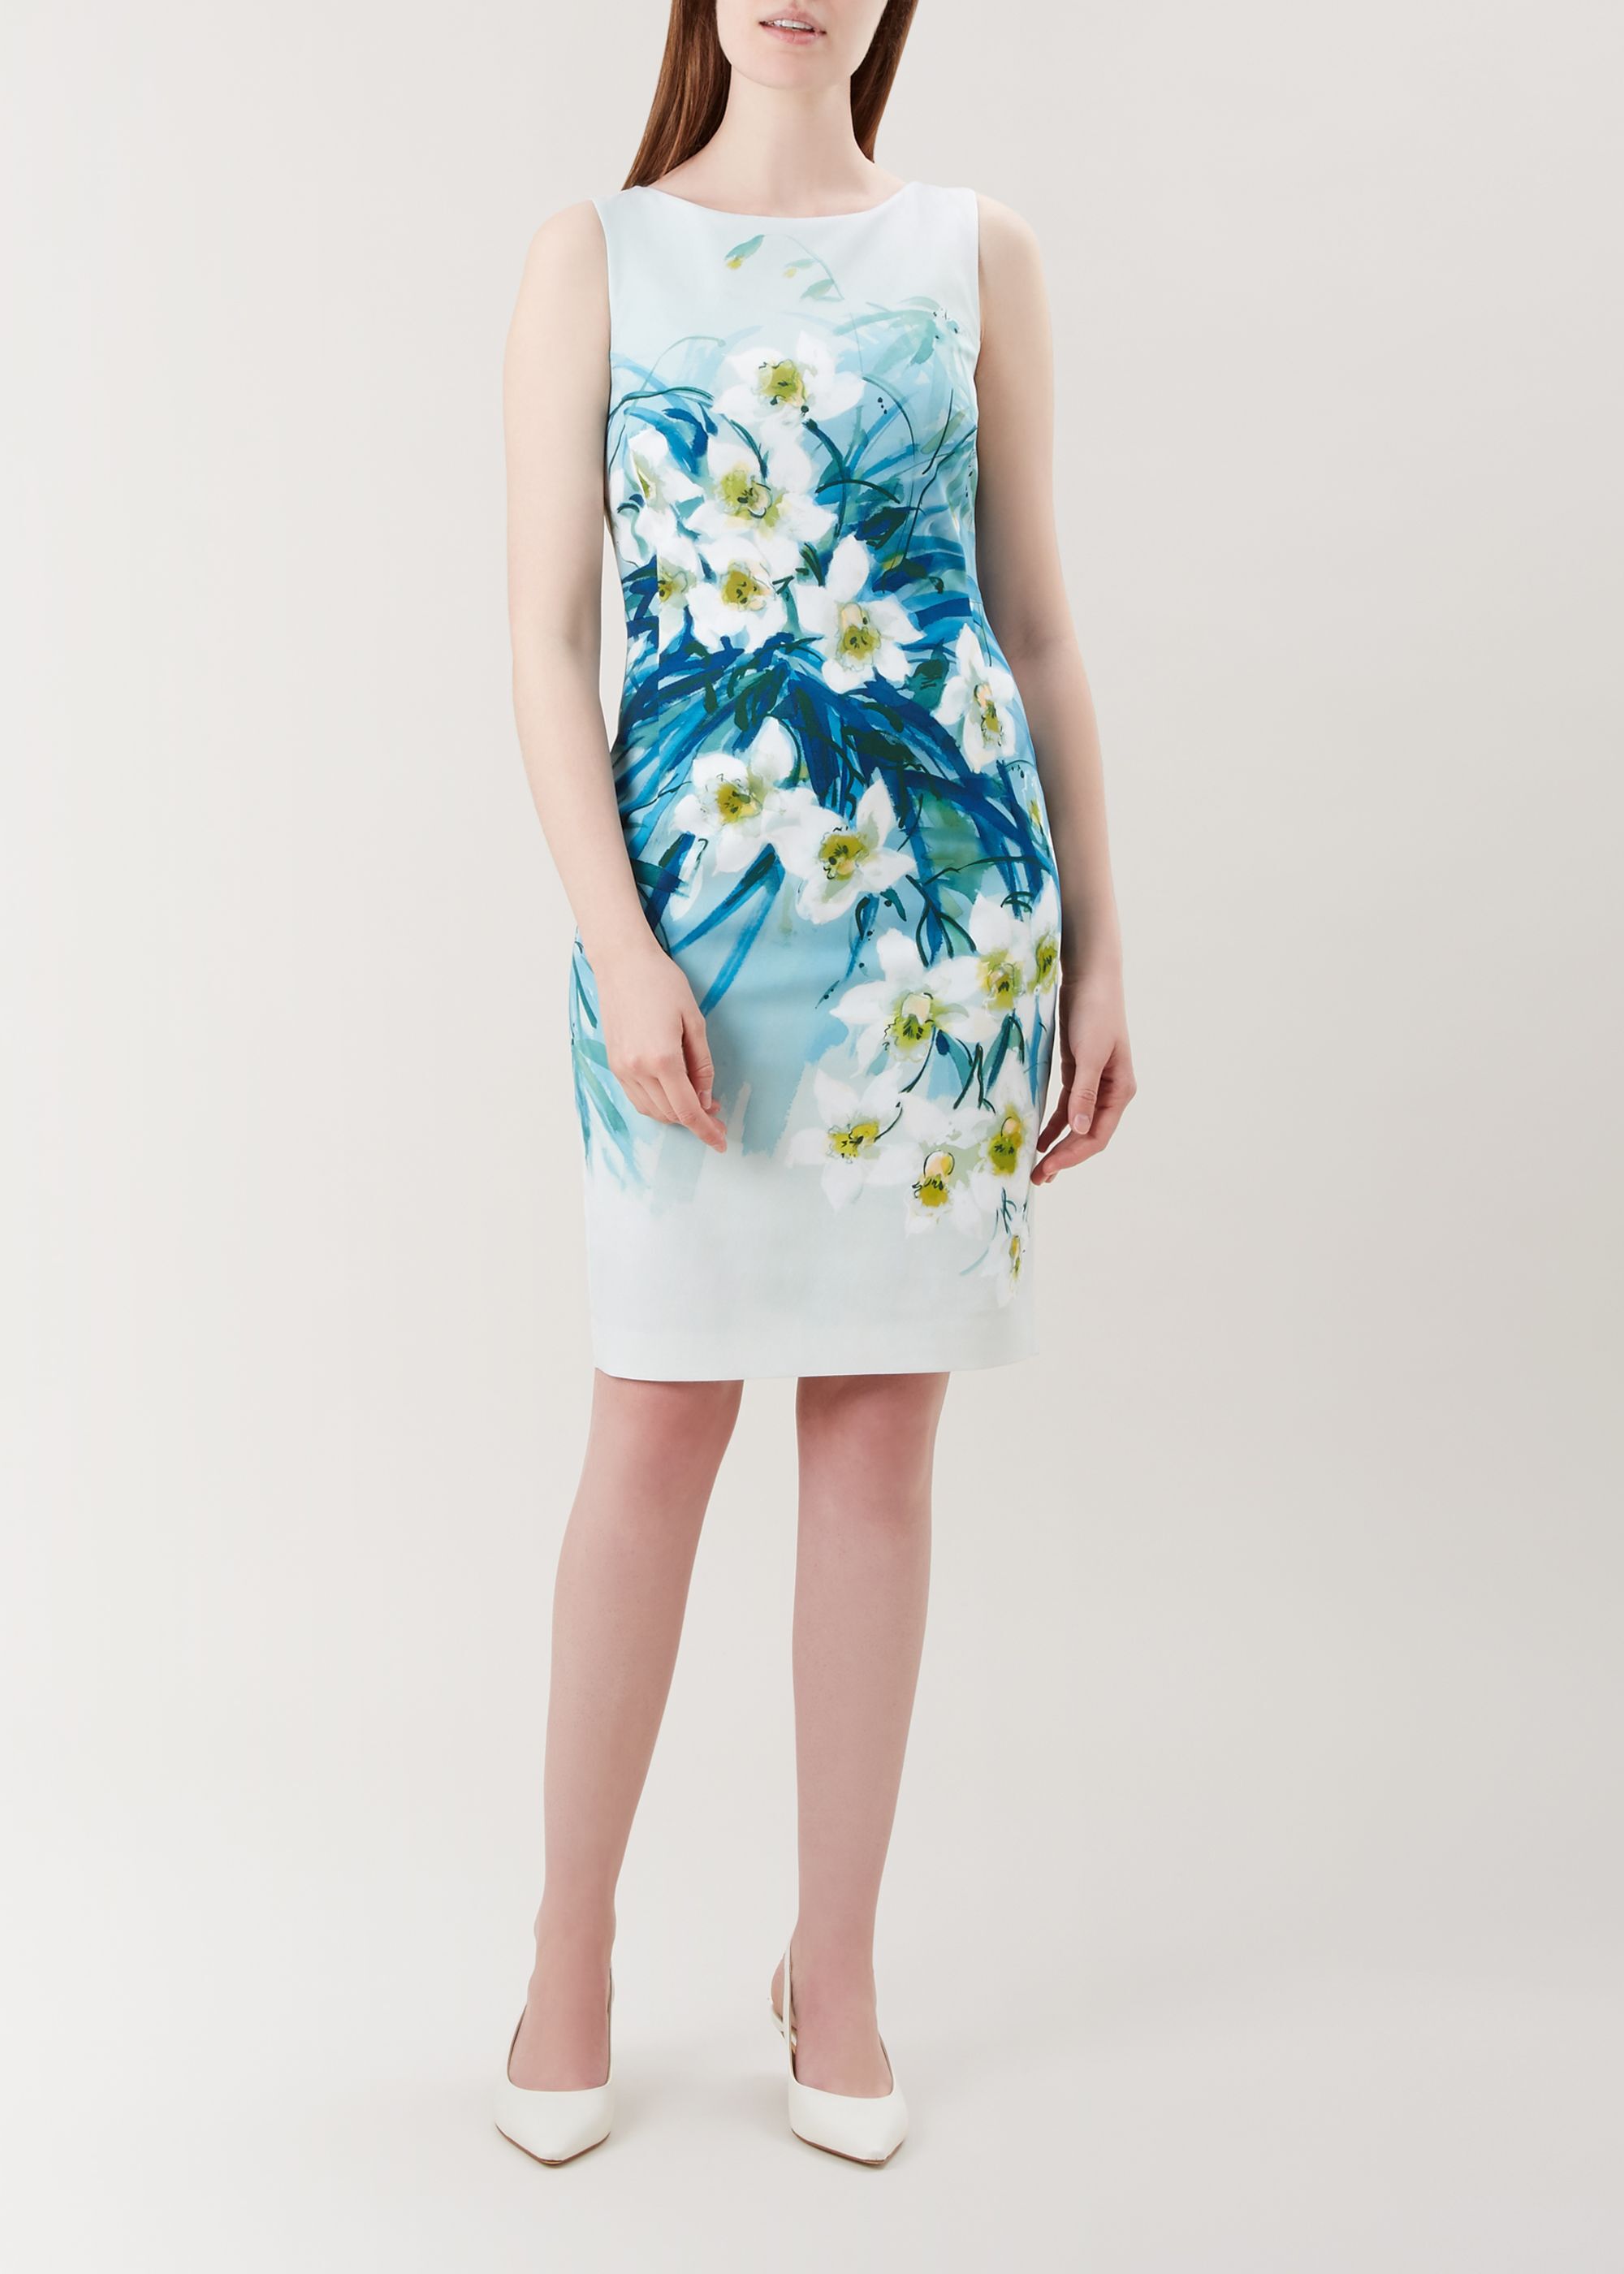 floral print bardot dress